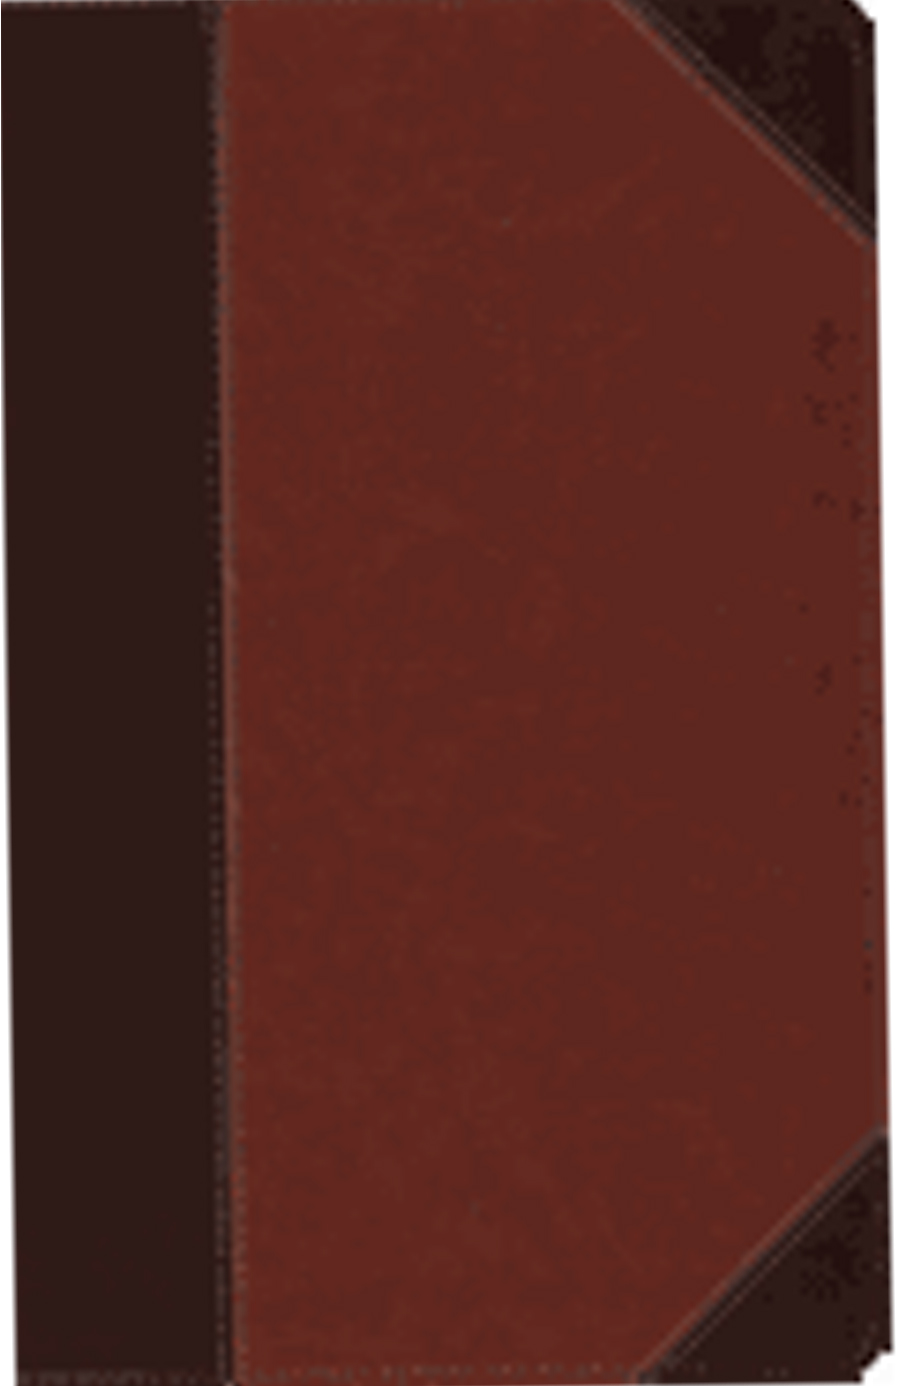 ESV Portfolio Design Thinline Bible From Crossway Books 108-9781581347364